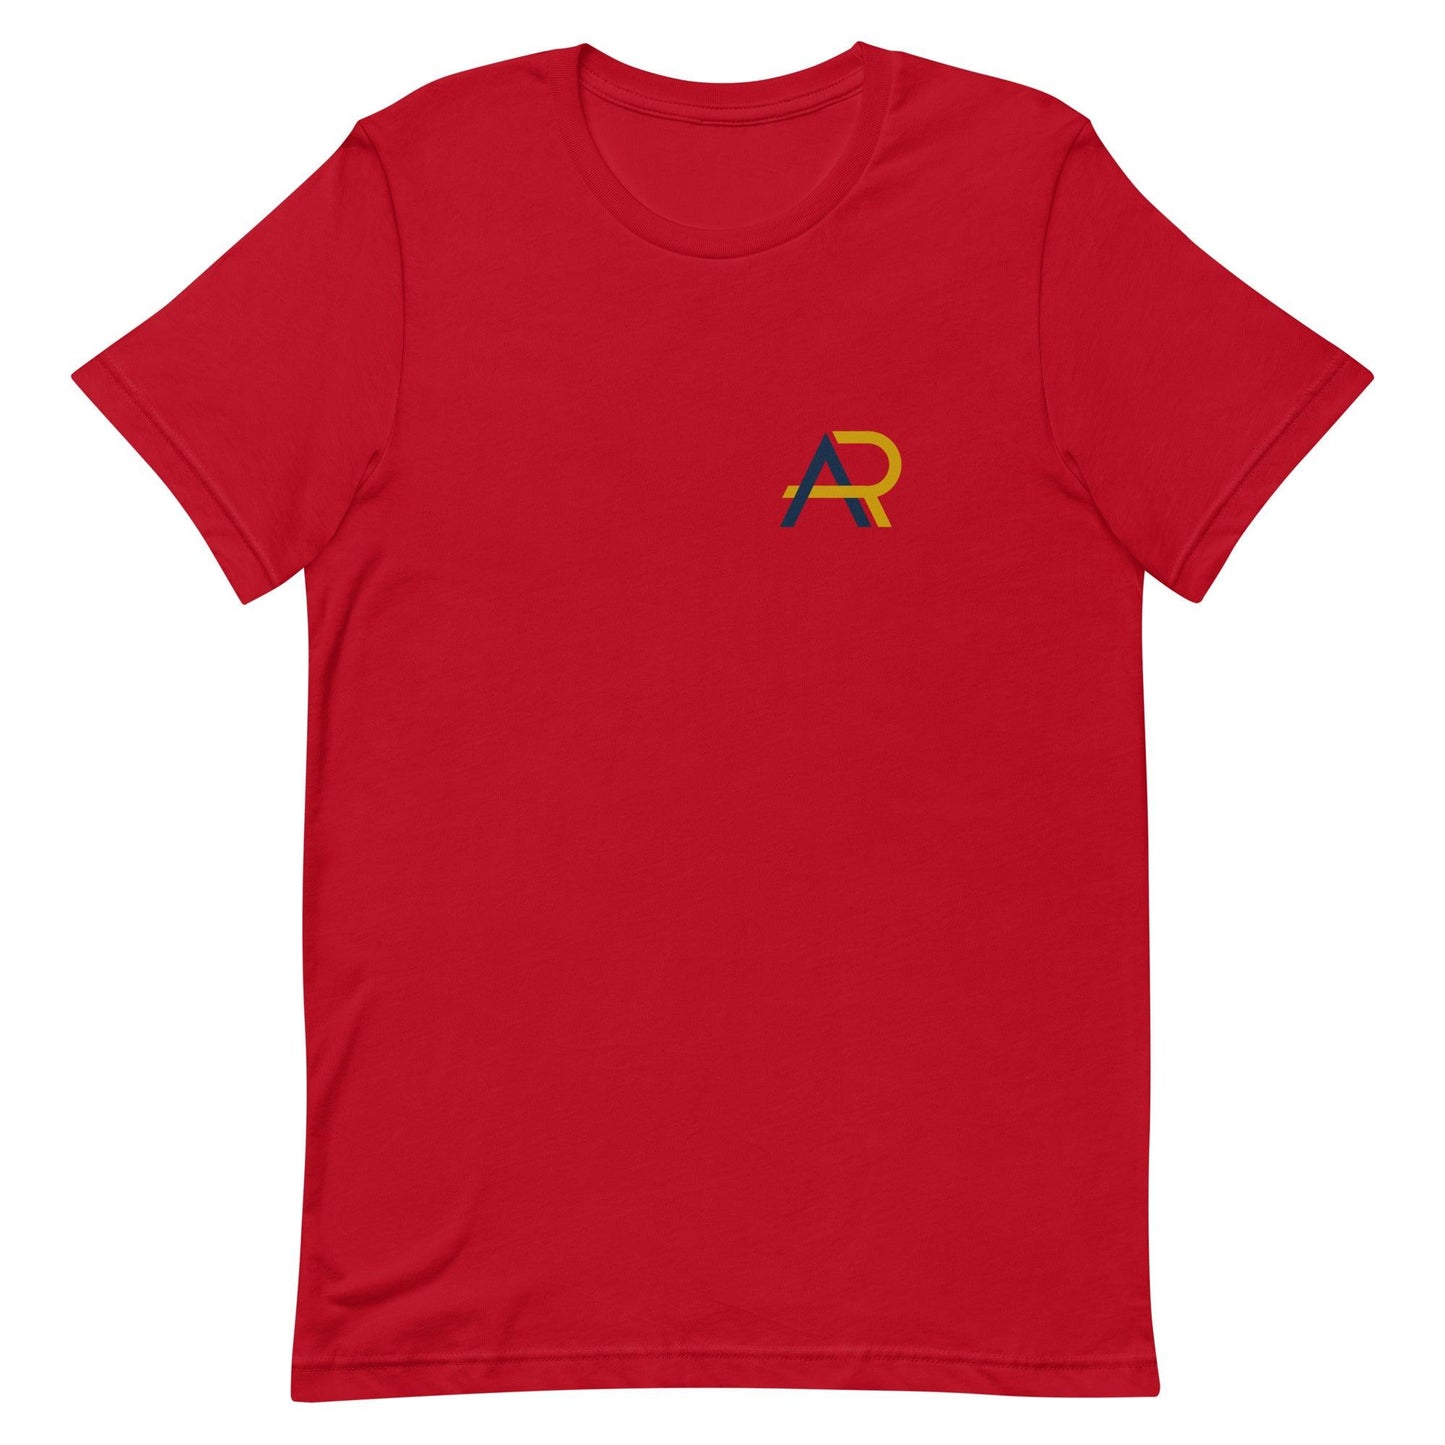 Alex Rao "Elite" t-shirt - Fan Arch